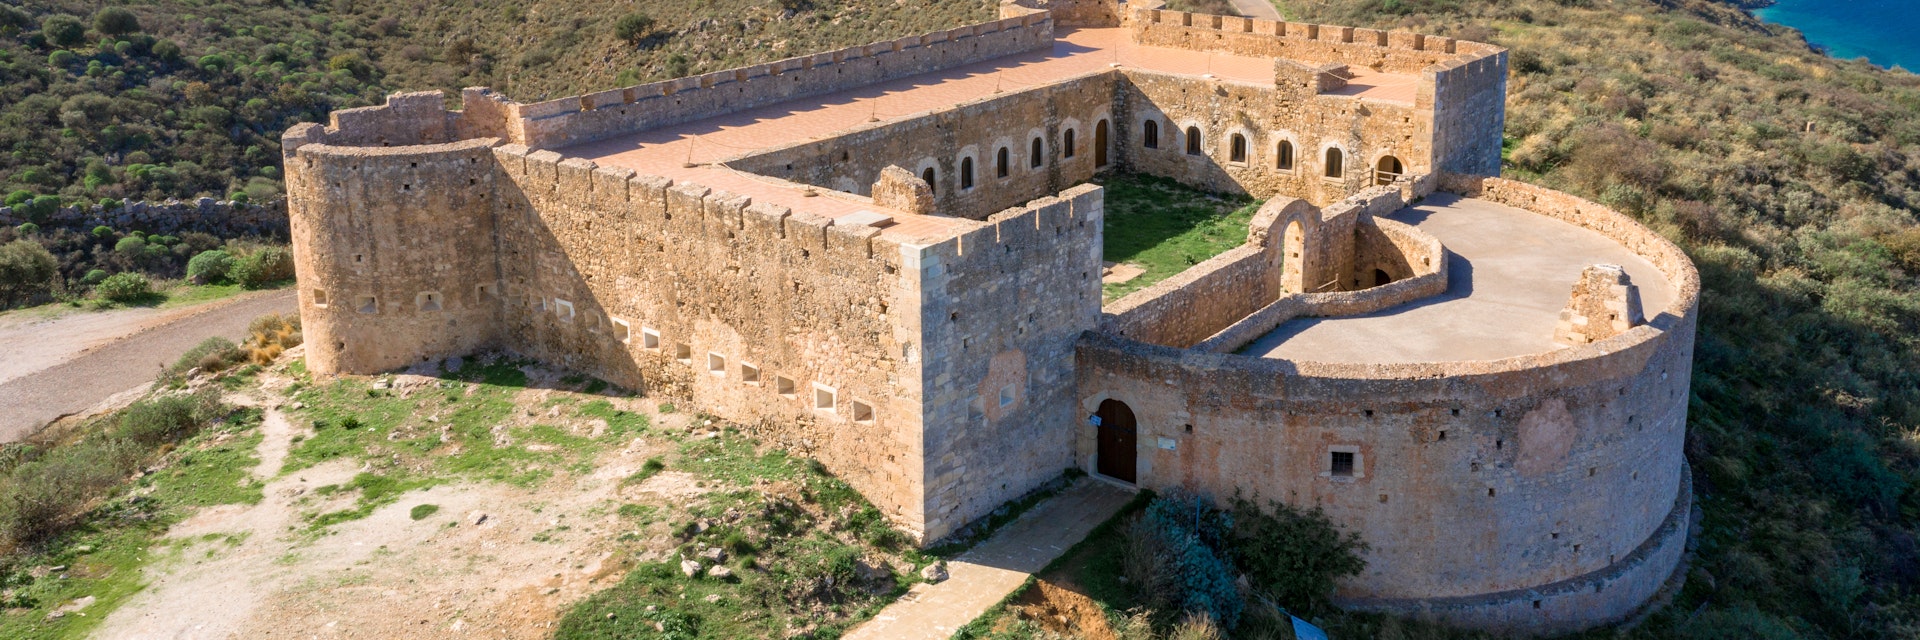 Turkish medieval fortress at Ancient Aptera in Chania, Crete, Greece.; Shutterstock ID 1575956149; your: Barbara Di Castro; gl: 65050; netsuite: digital; full: poi
1575956149